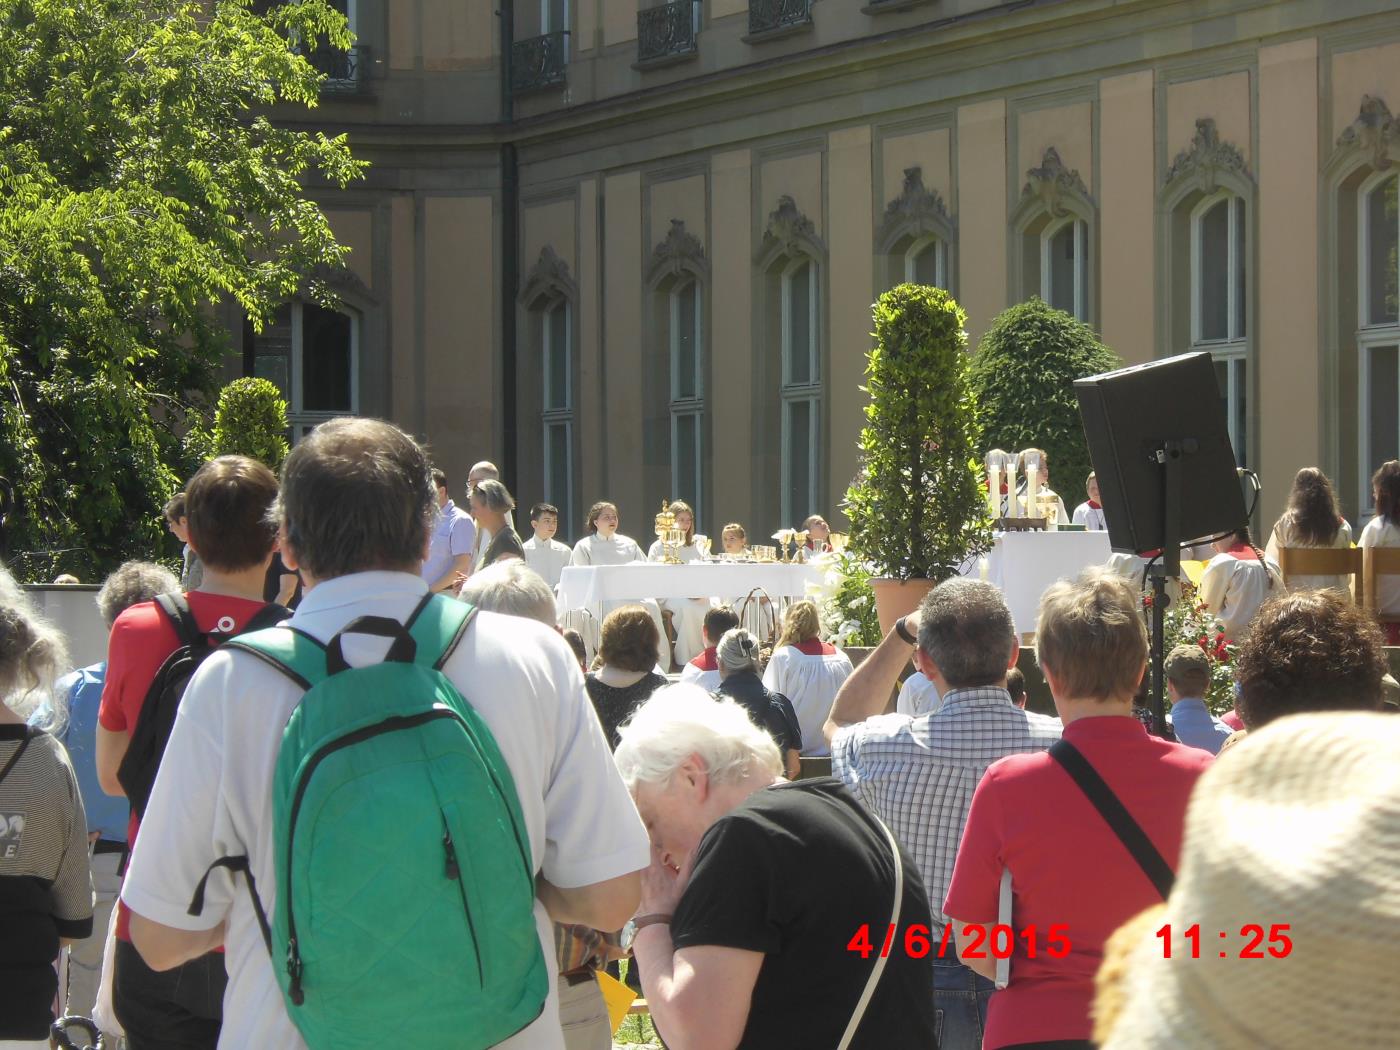 Kirchentag Stuttgart – Polizei reagiert nervös